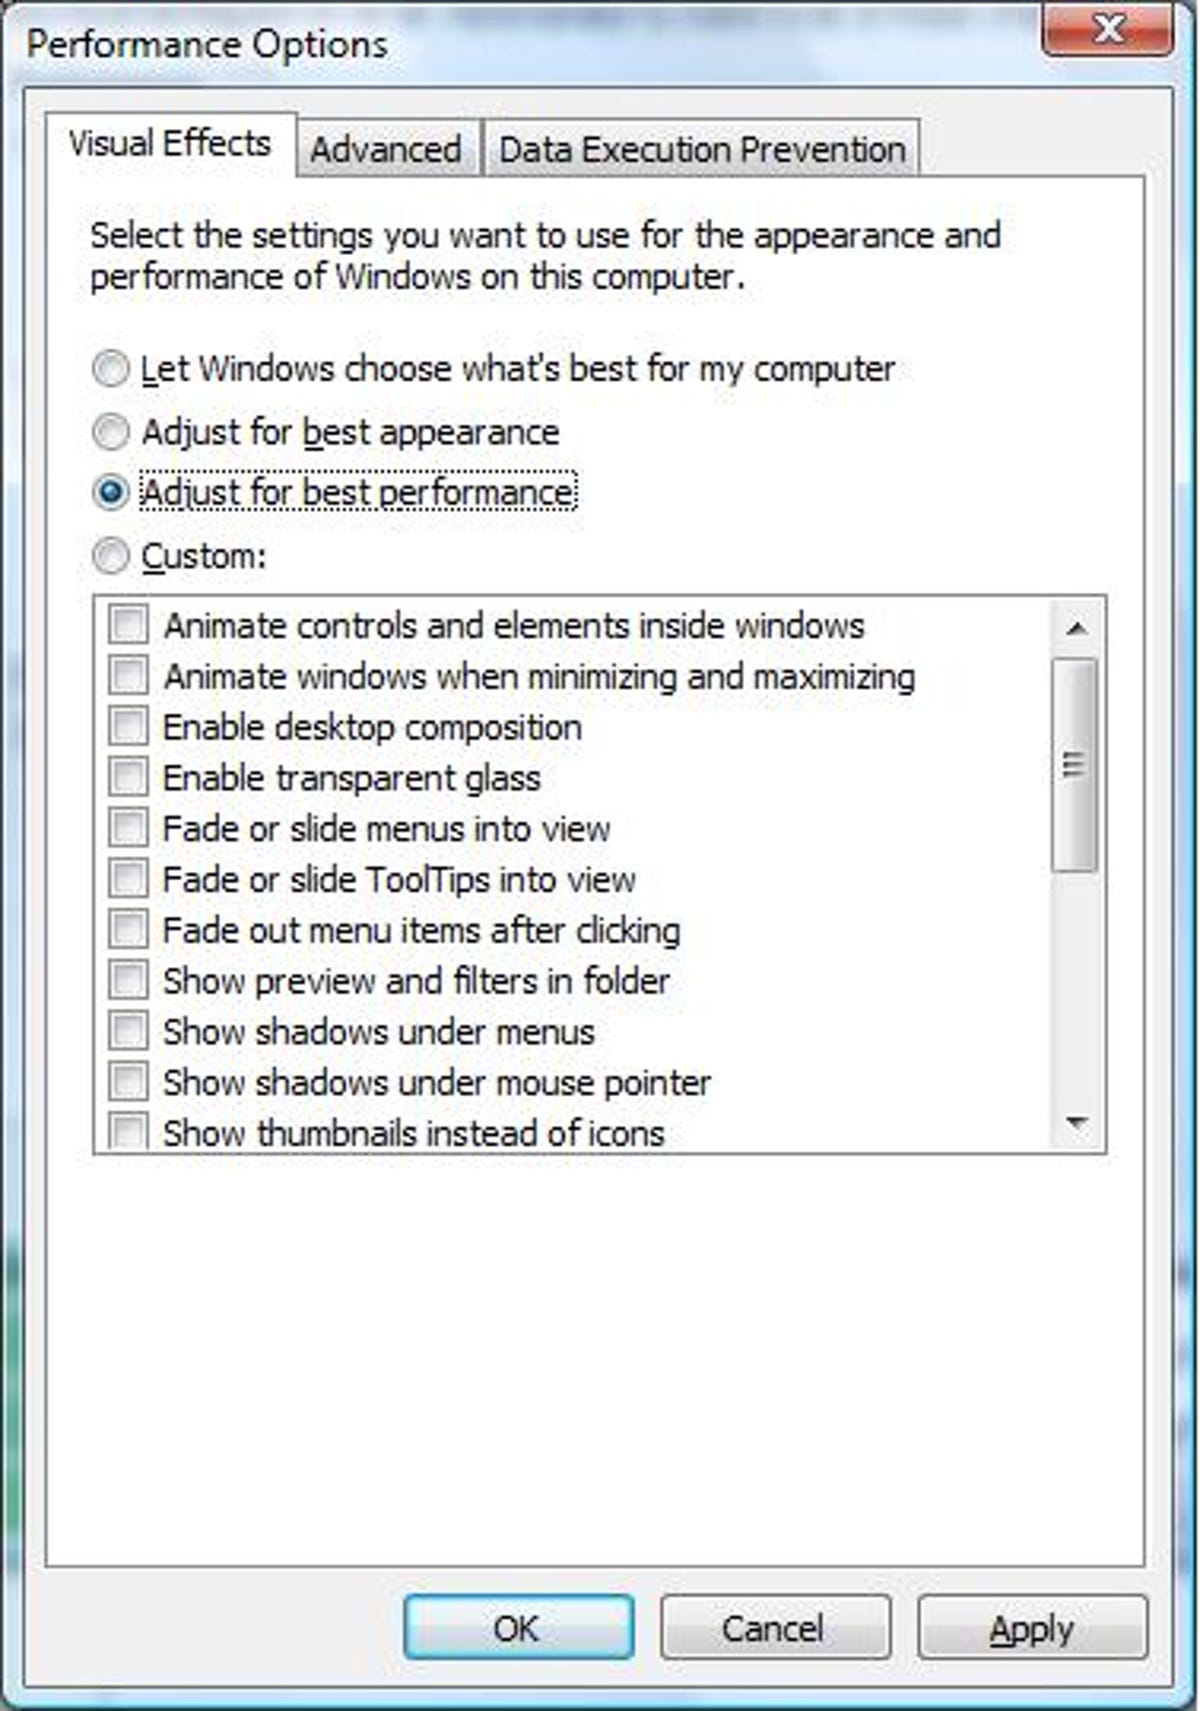 The Windows Performance Options dialog box.